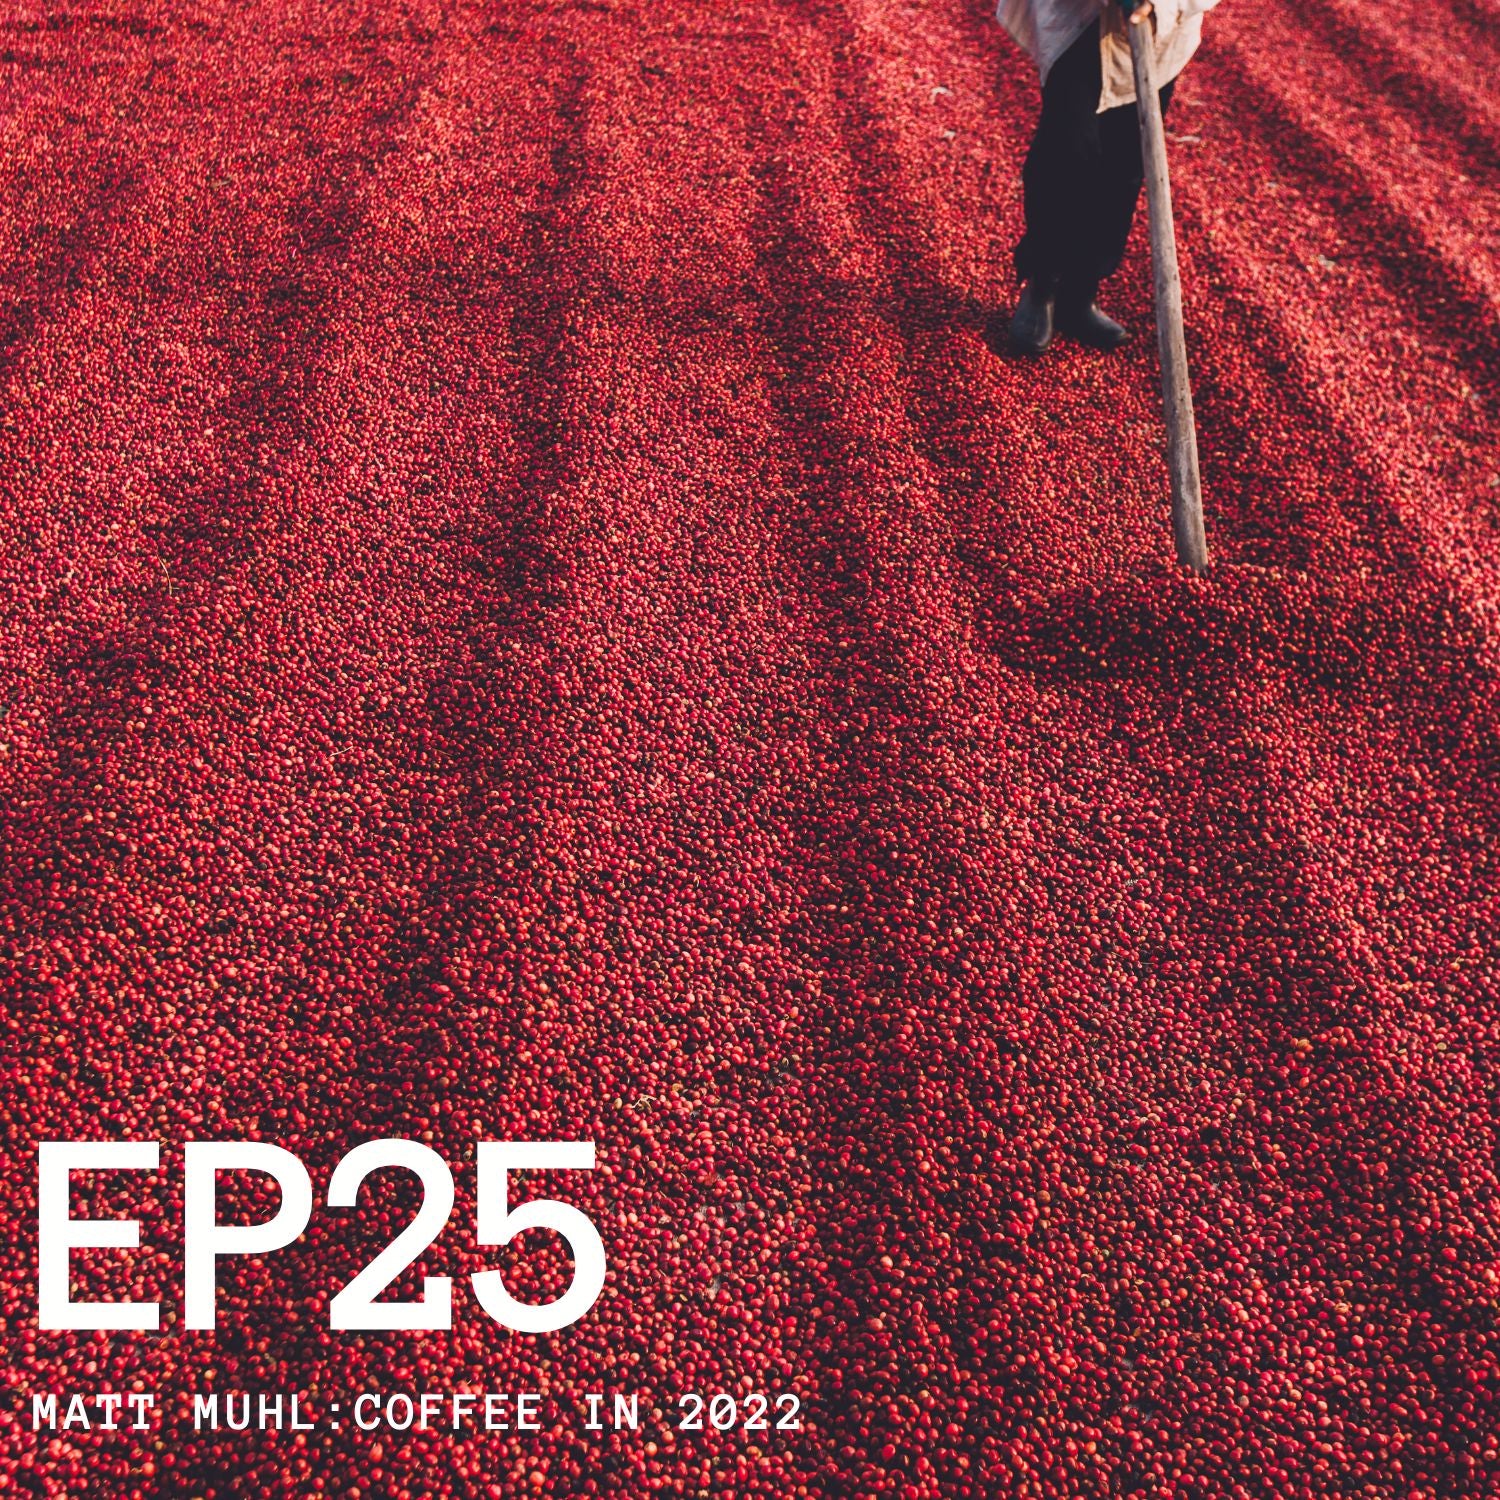 Episode 25 - Matt Muhl: Coffee in 2022